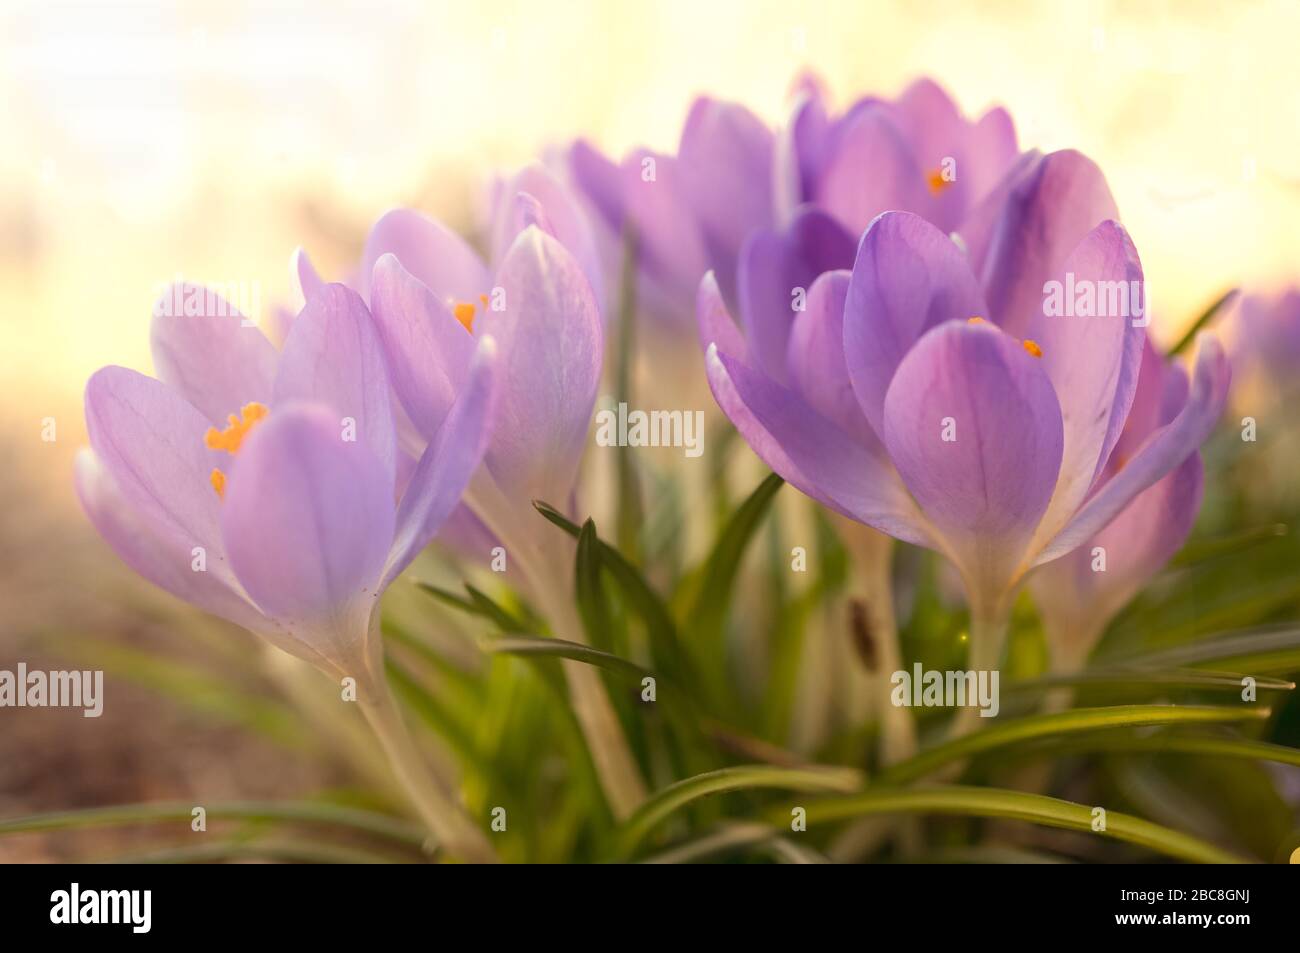 Sun-lit delicate purple crocus flowers. Macro, soft focus, shallow depth of field. Romantic gentle artistic image Stock Photo